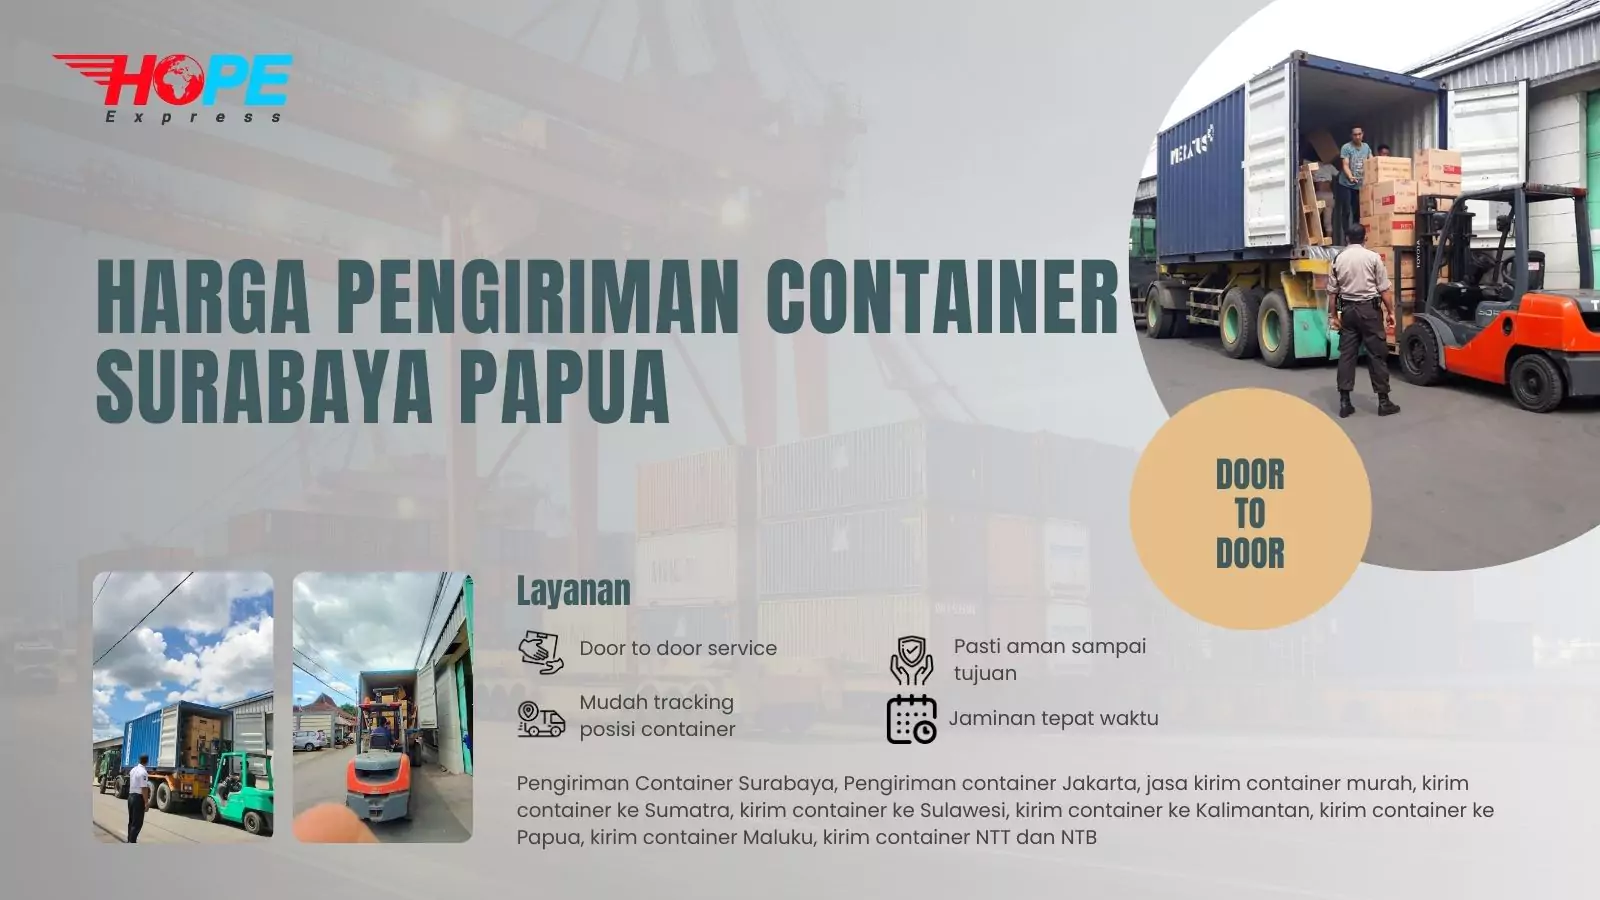 Daftar Harga Pengiriman Container Surabaya Papua